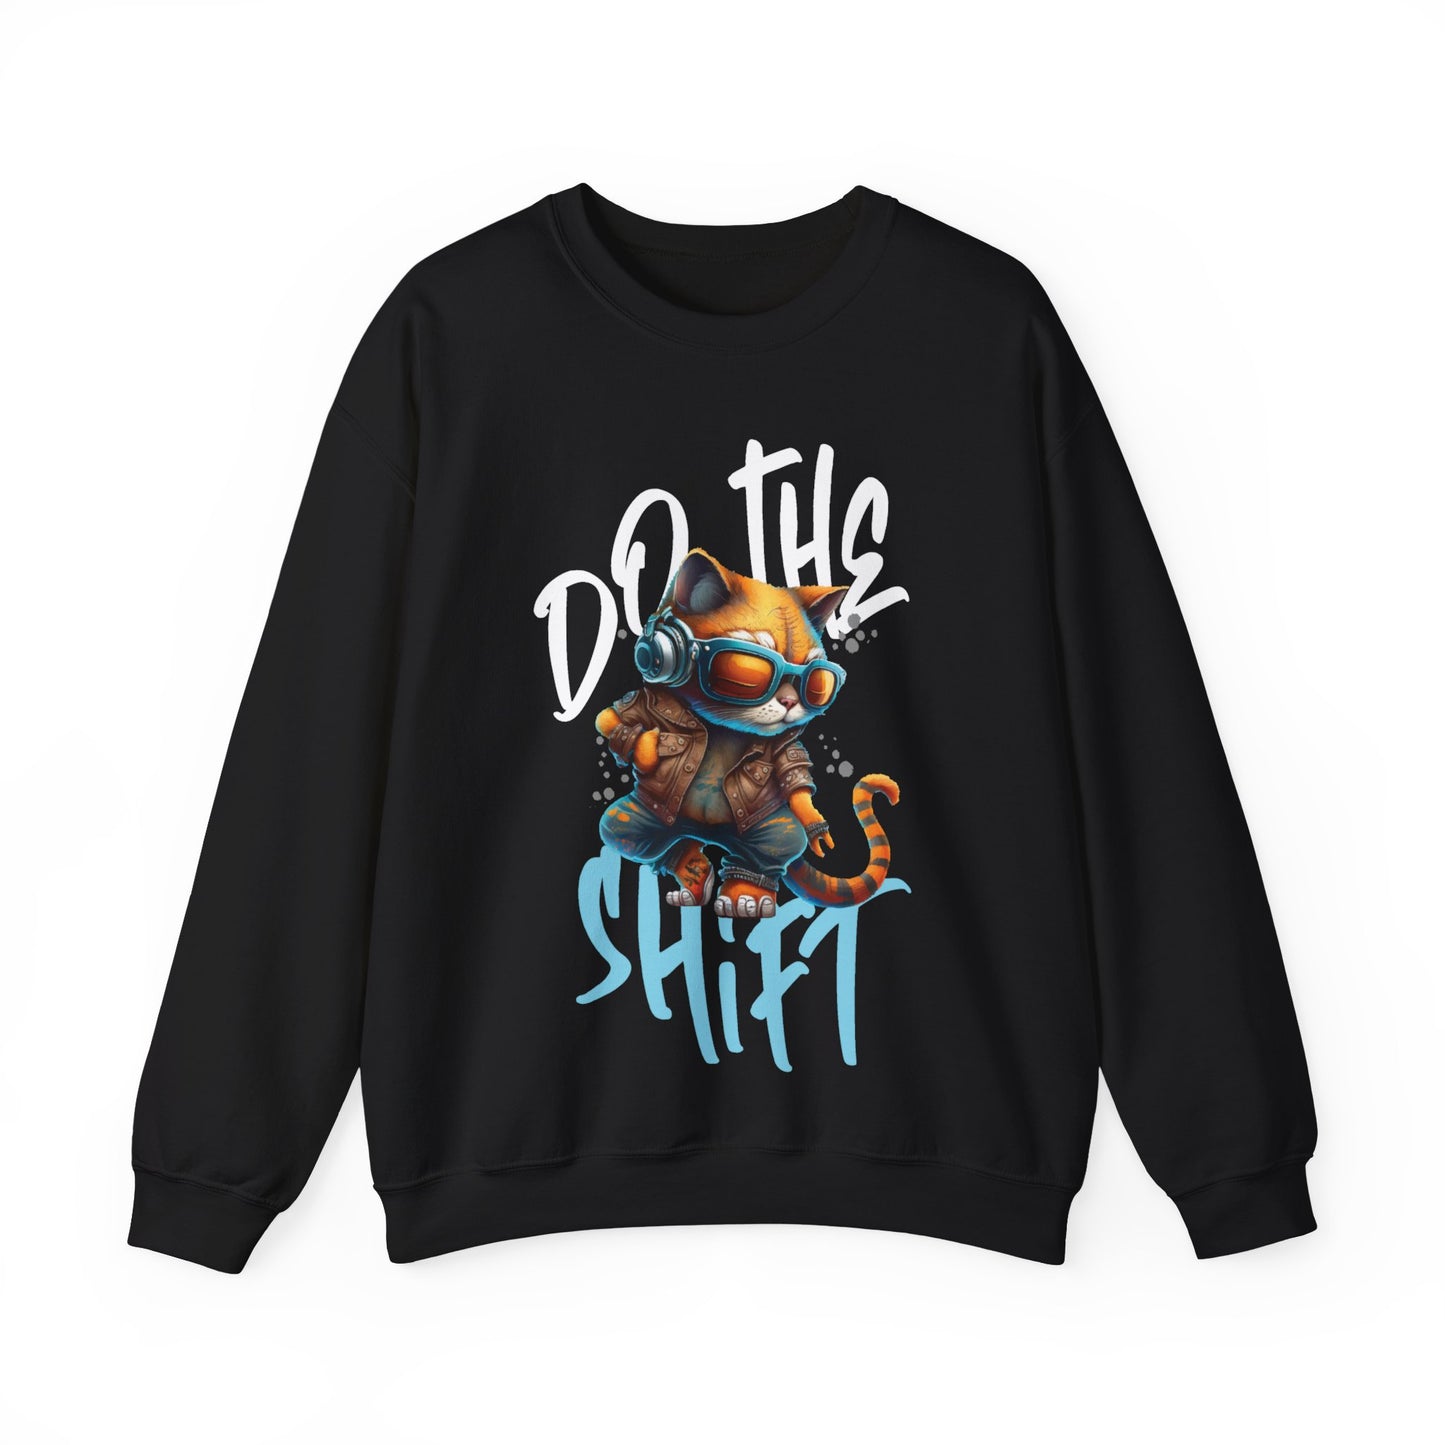 Do This Shift Sweatshirt